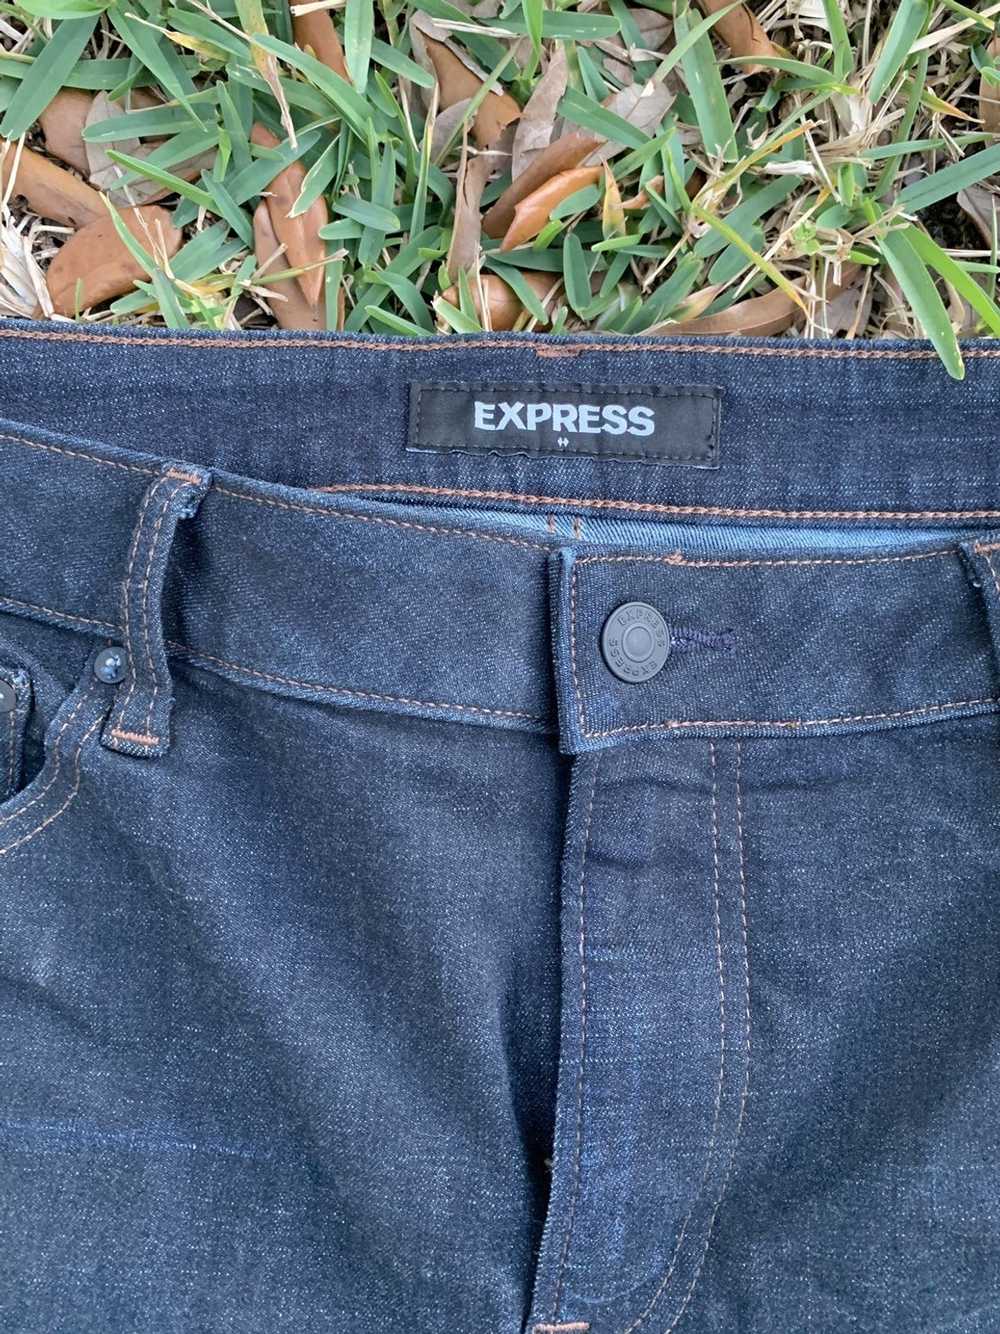 Express Express Hyper Stretch Jean - image 2